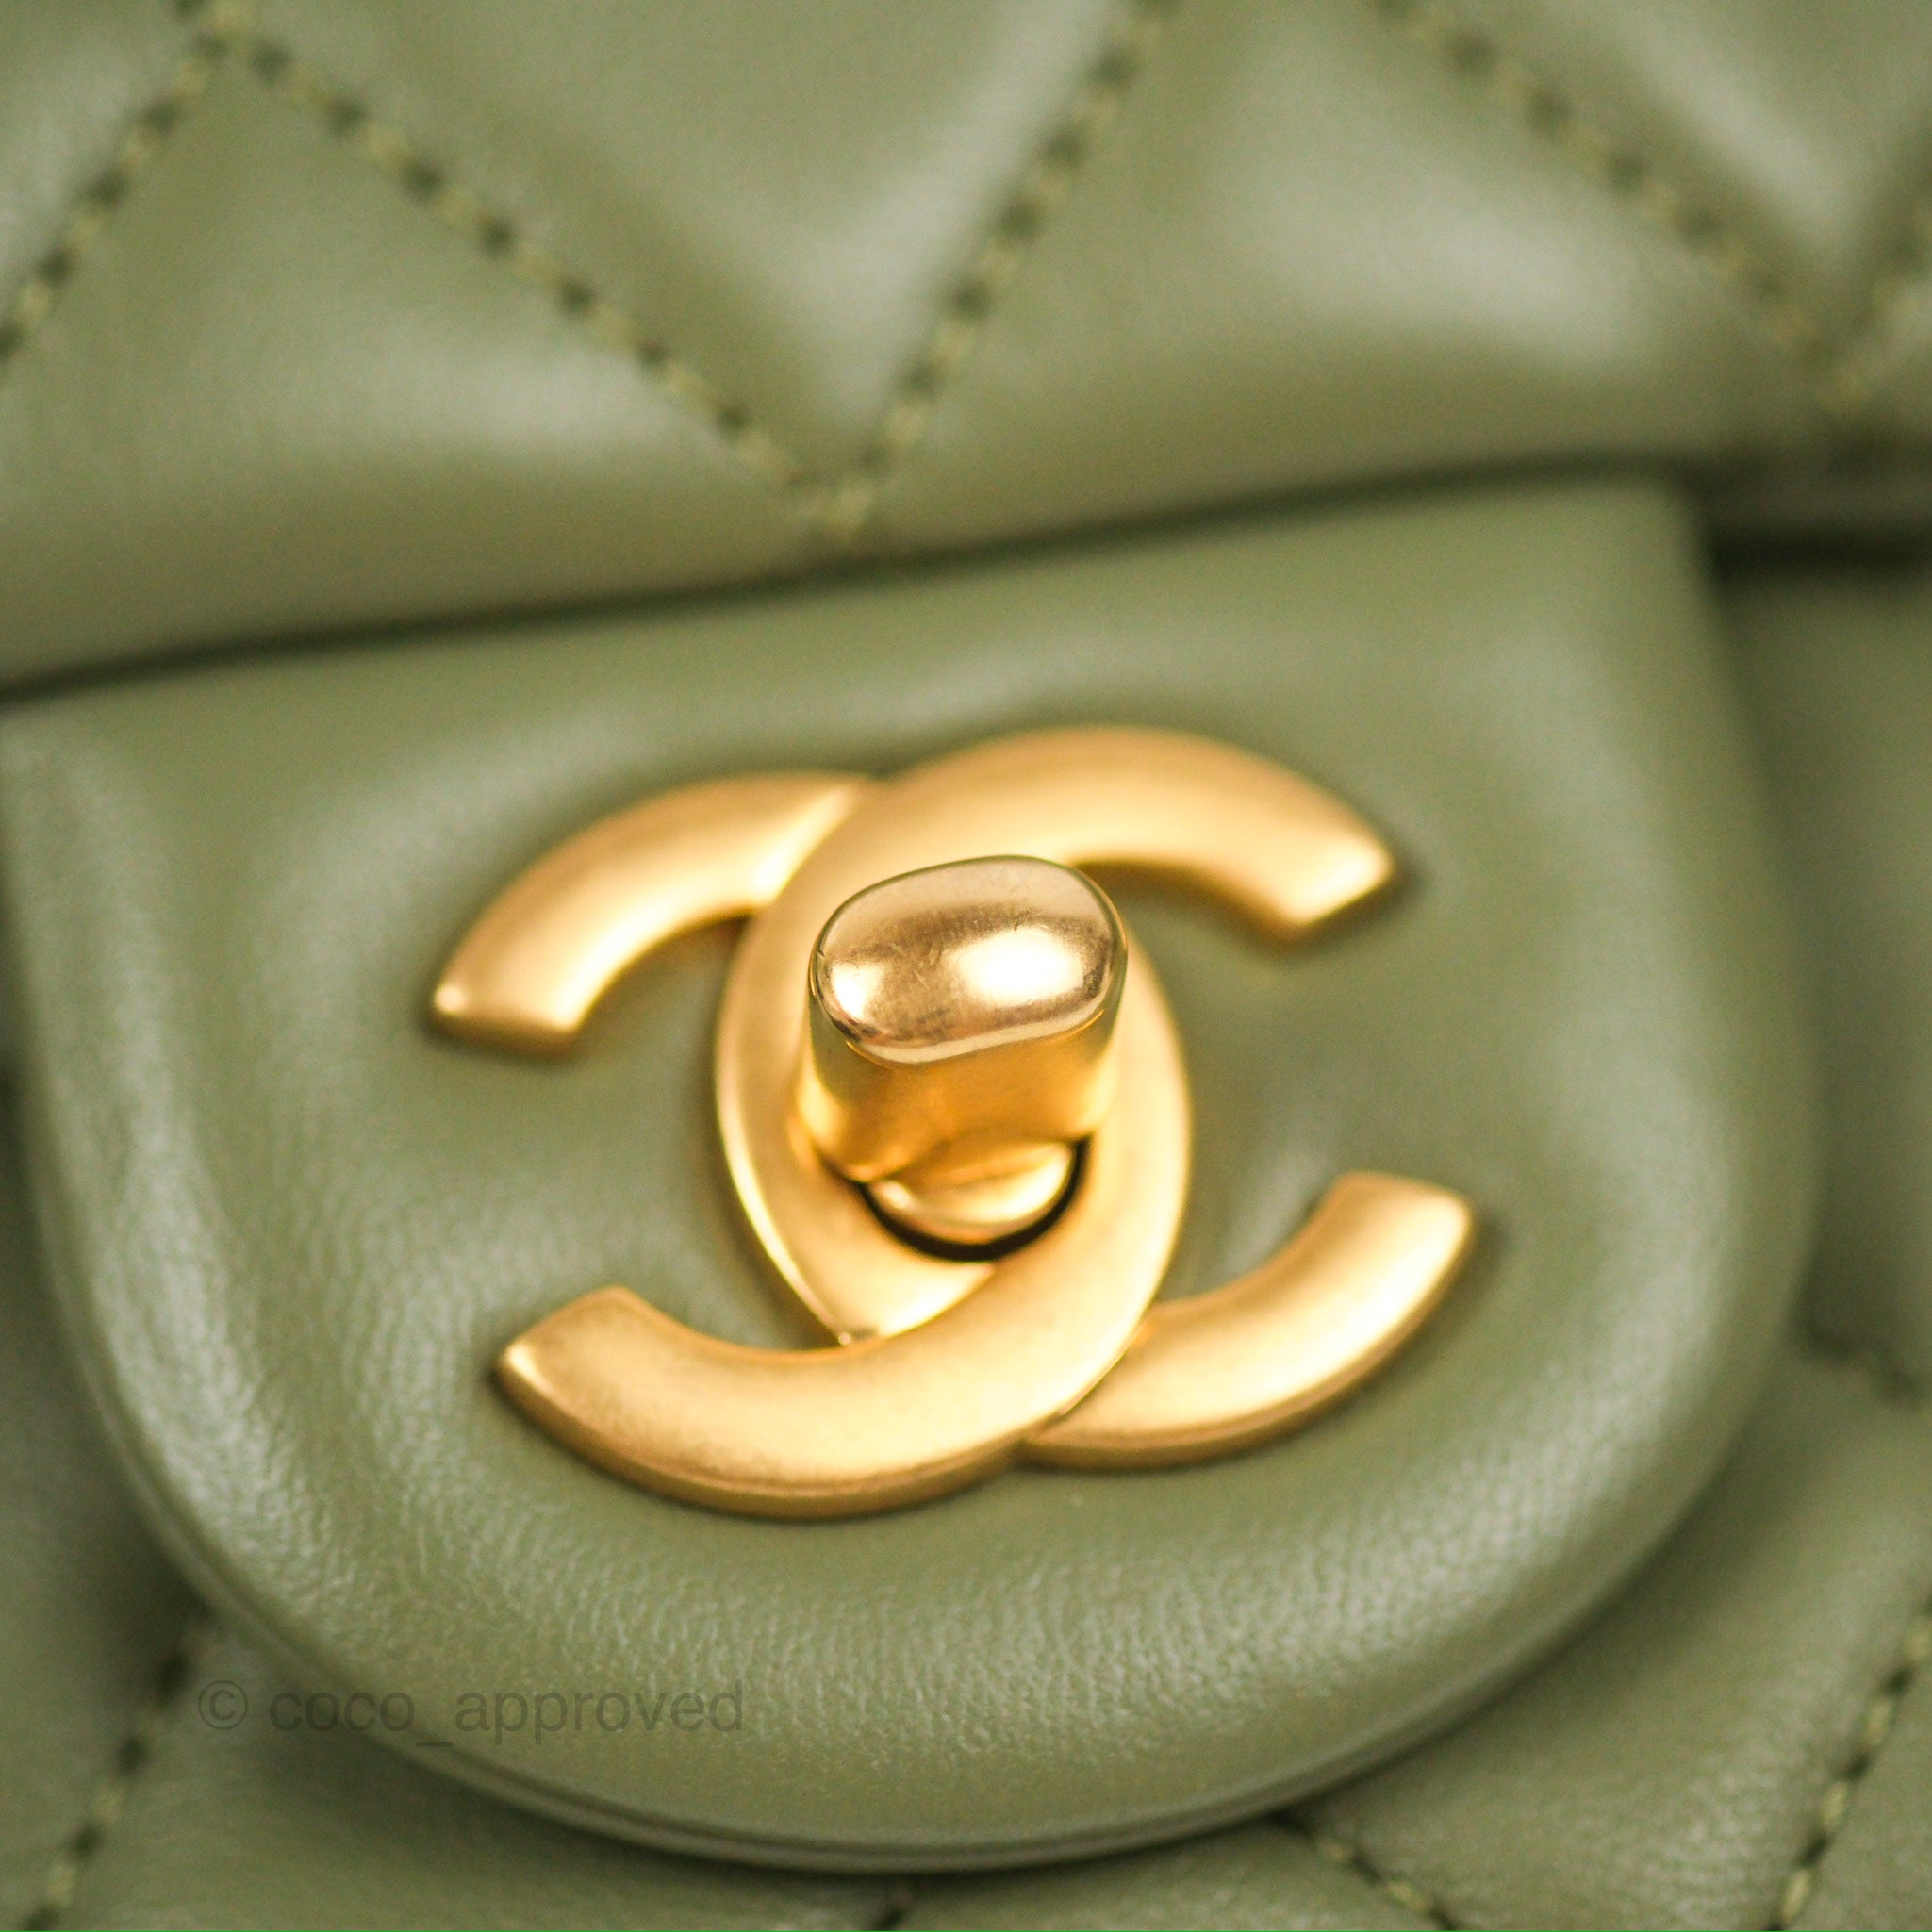 Chanel Classic Jumbo Double Flap Bag Caviar Olive Green GHW